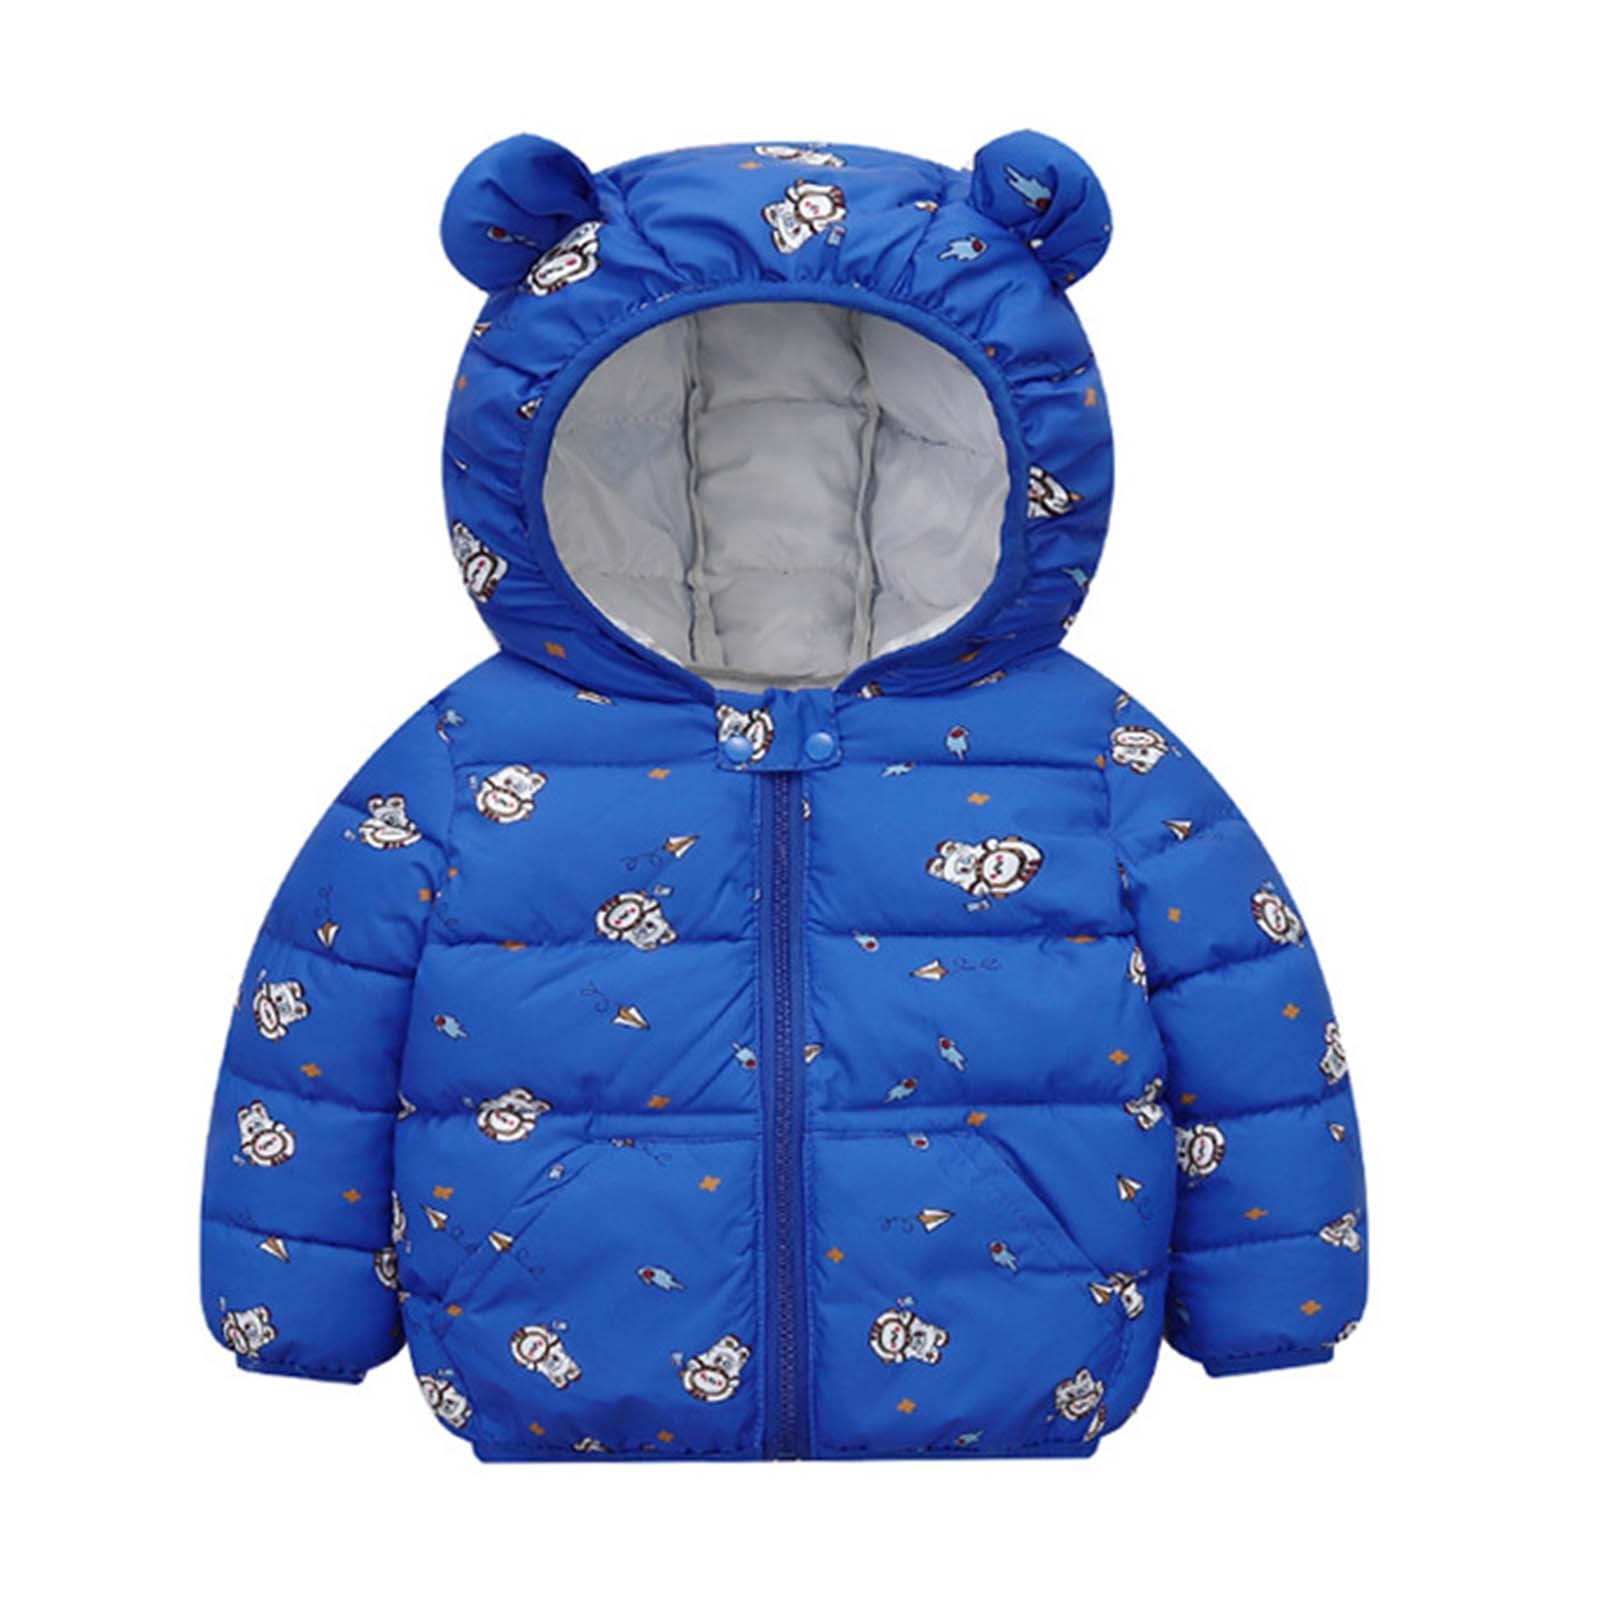 ZCFZJW Winter Coats for Kids Toddler Cotton Down Coat Cute Hoodie Cute Teddy Bear Sherpa Light Jacket Baby Boys Girls(Dark Blue,2-3 Years) - Walmart.com